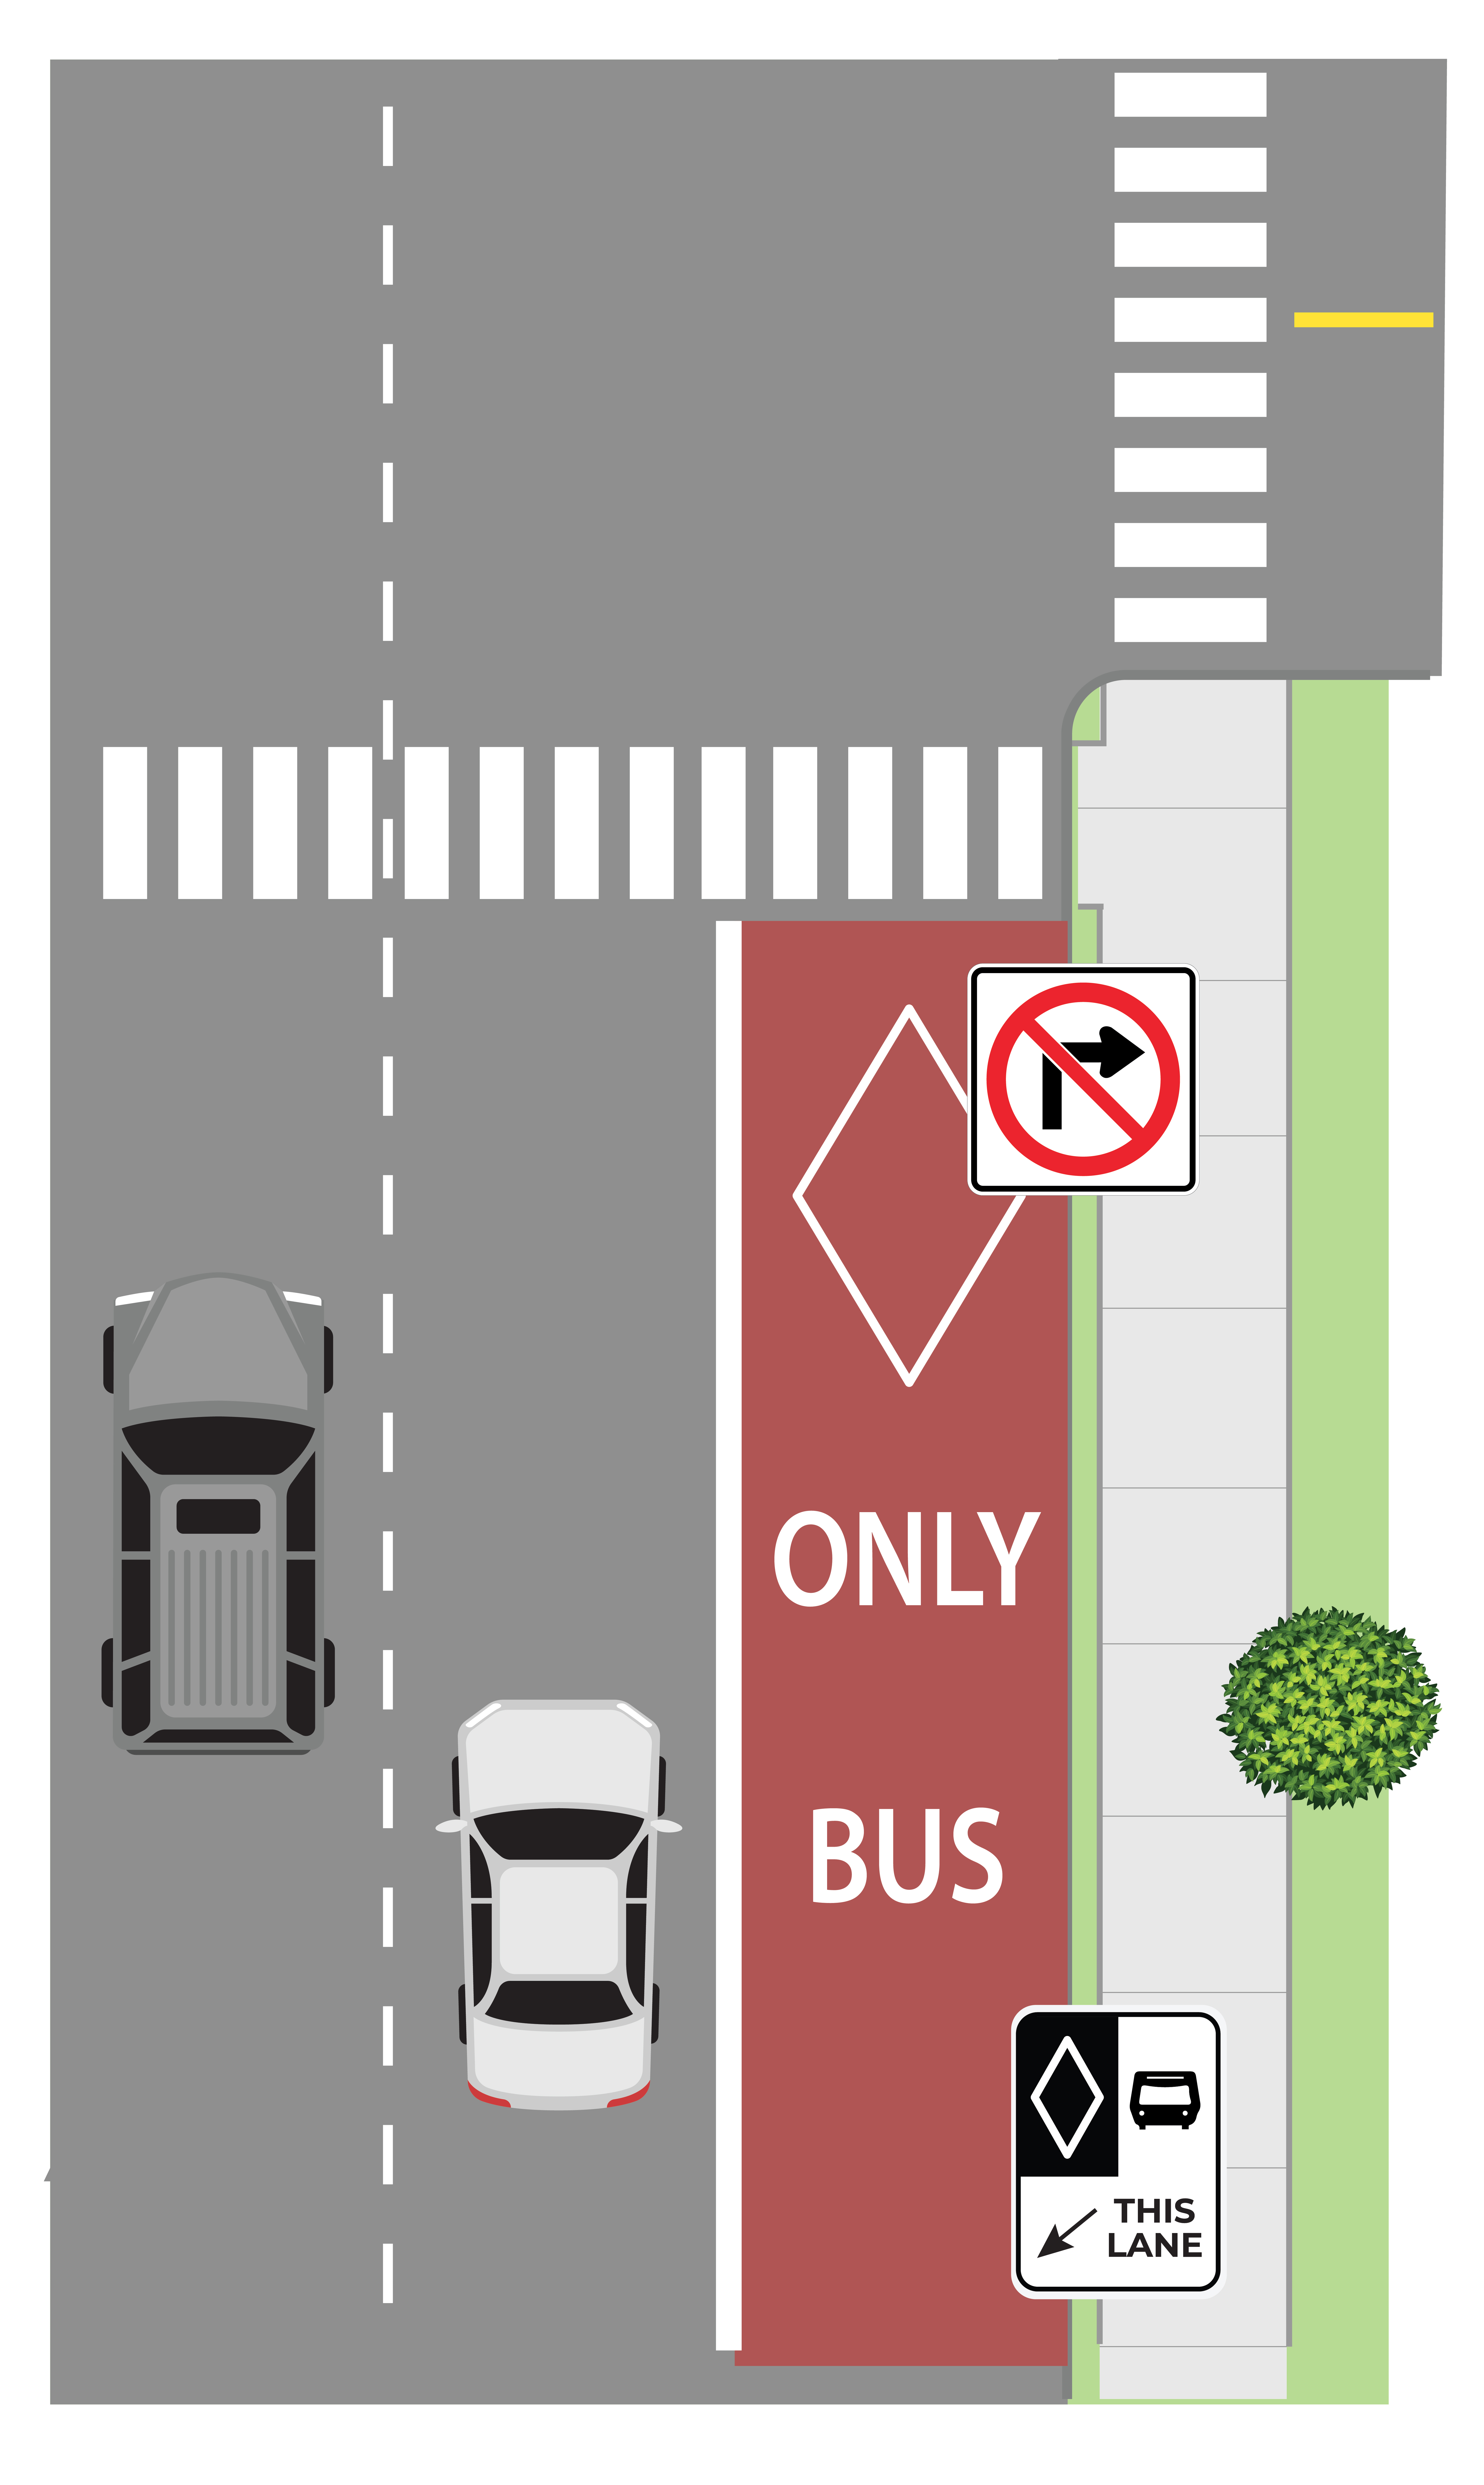 Bus lane no right turn graphic